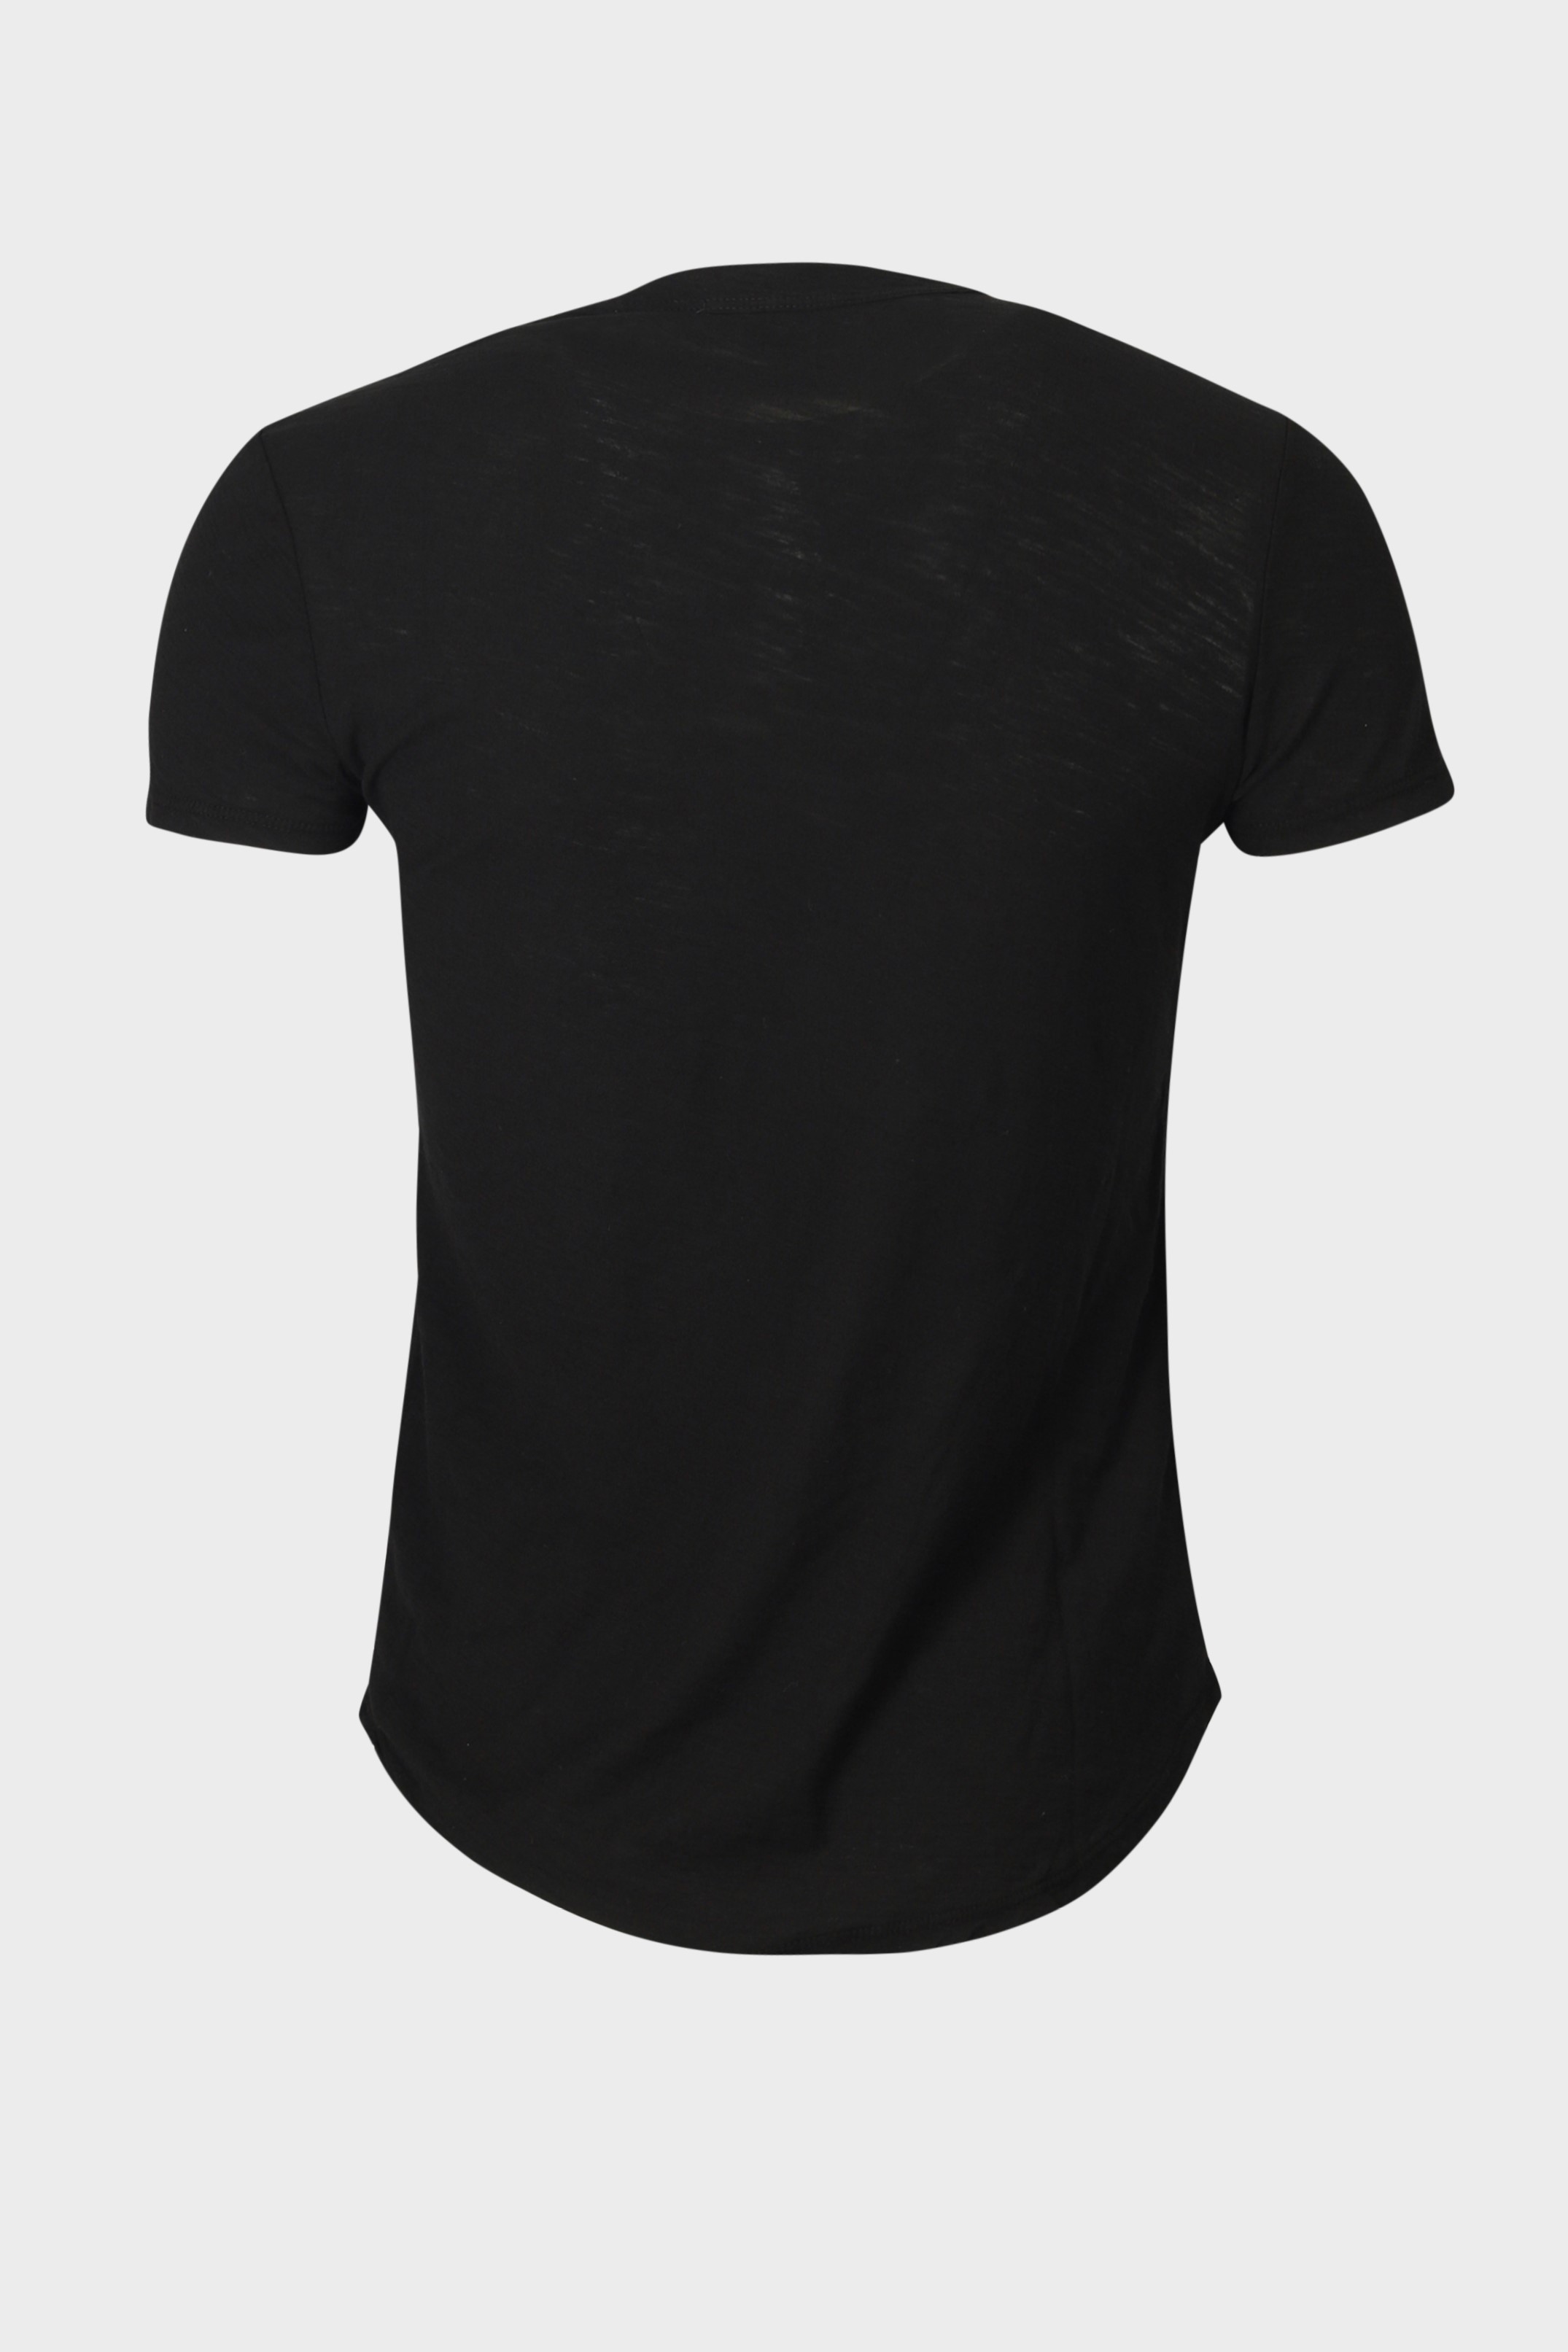 JAMES PERSE Sheer Slub Crew Neck T-Shirt in Black 4/XL